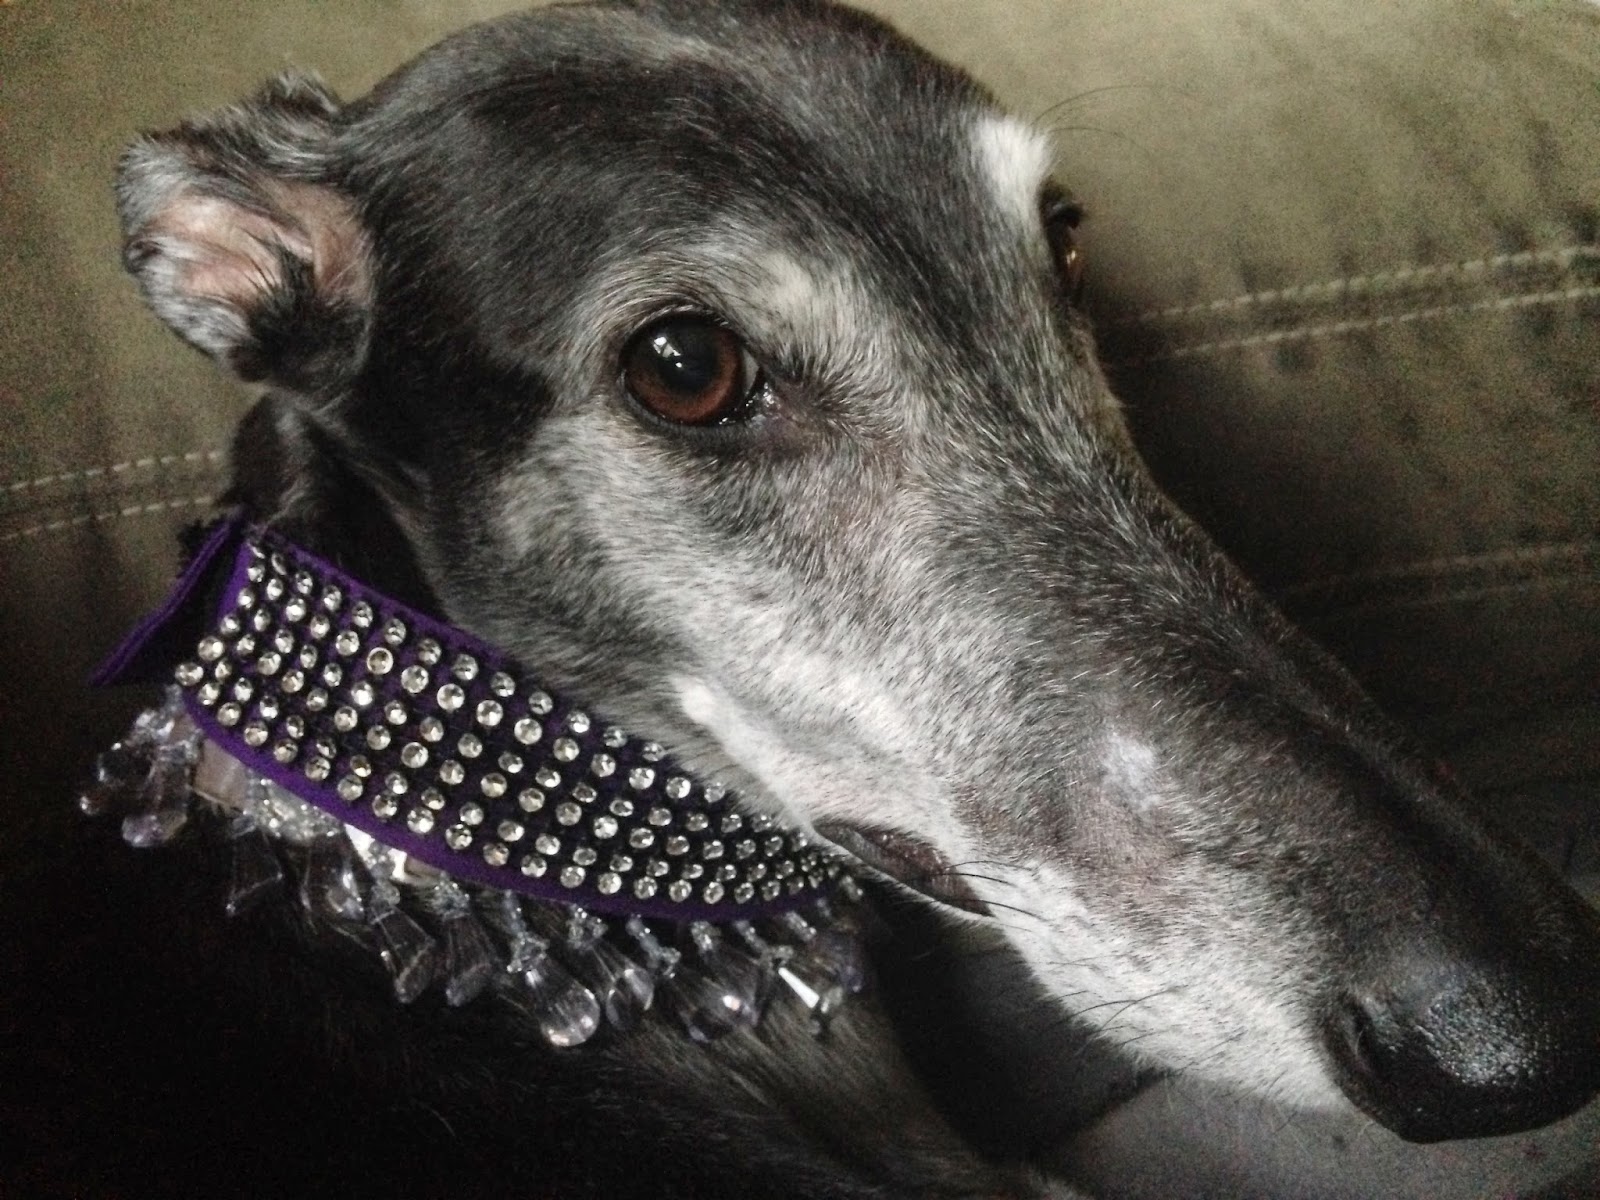 Bettina Greyhound and her new fancy collar